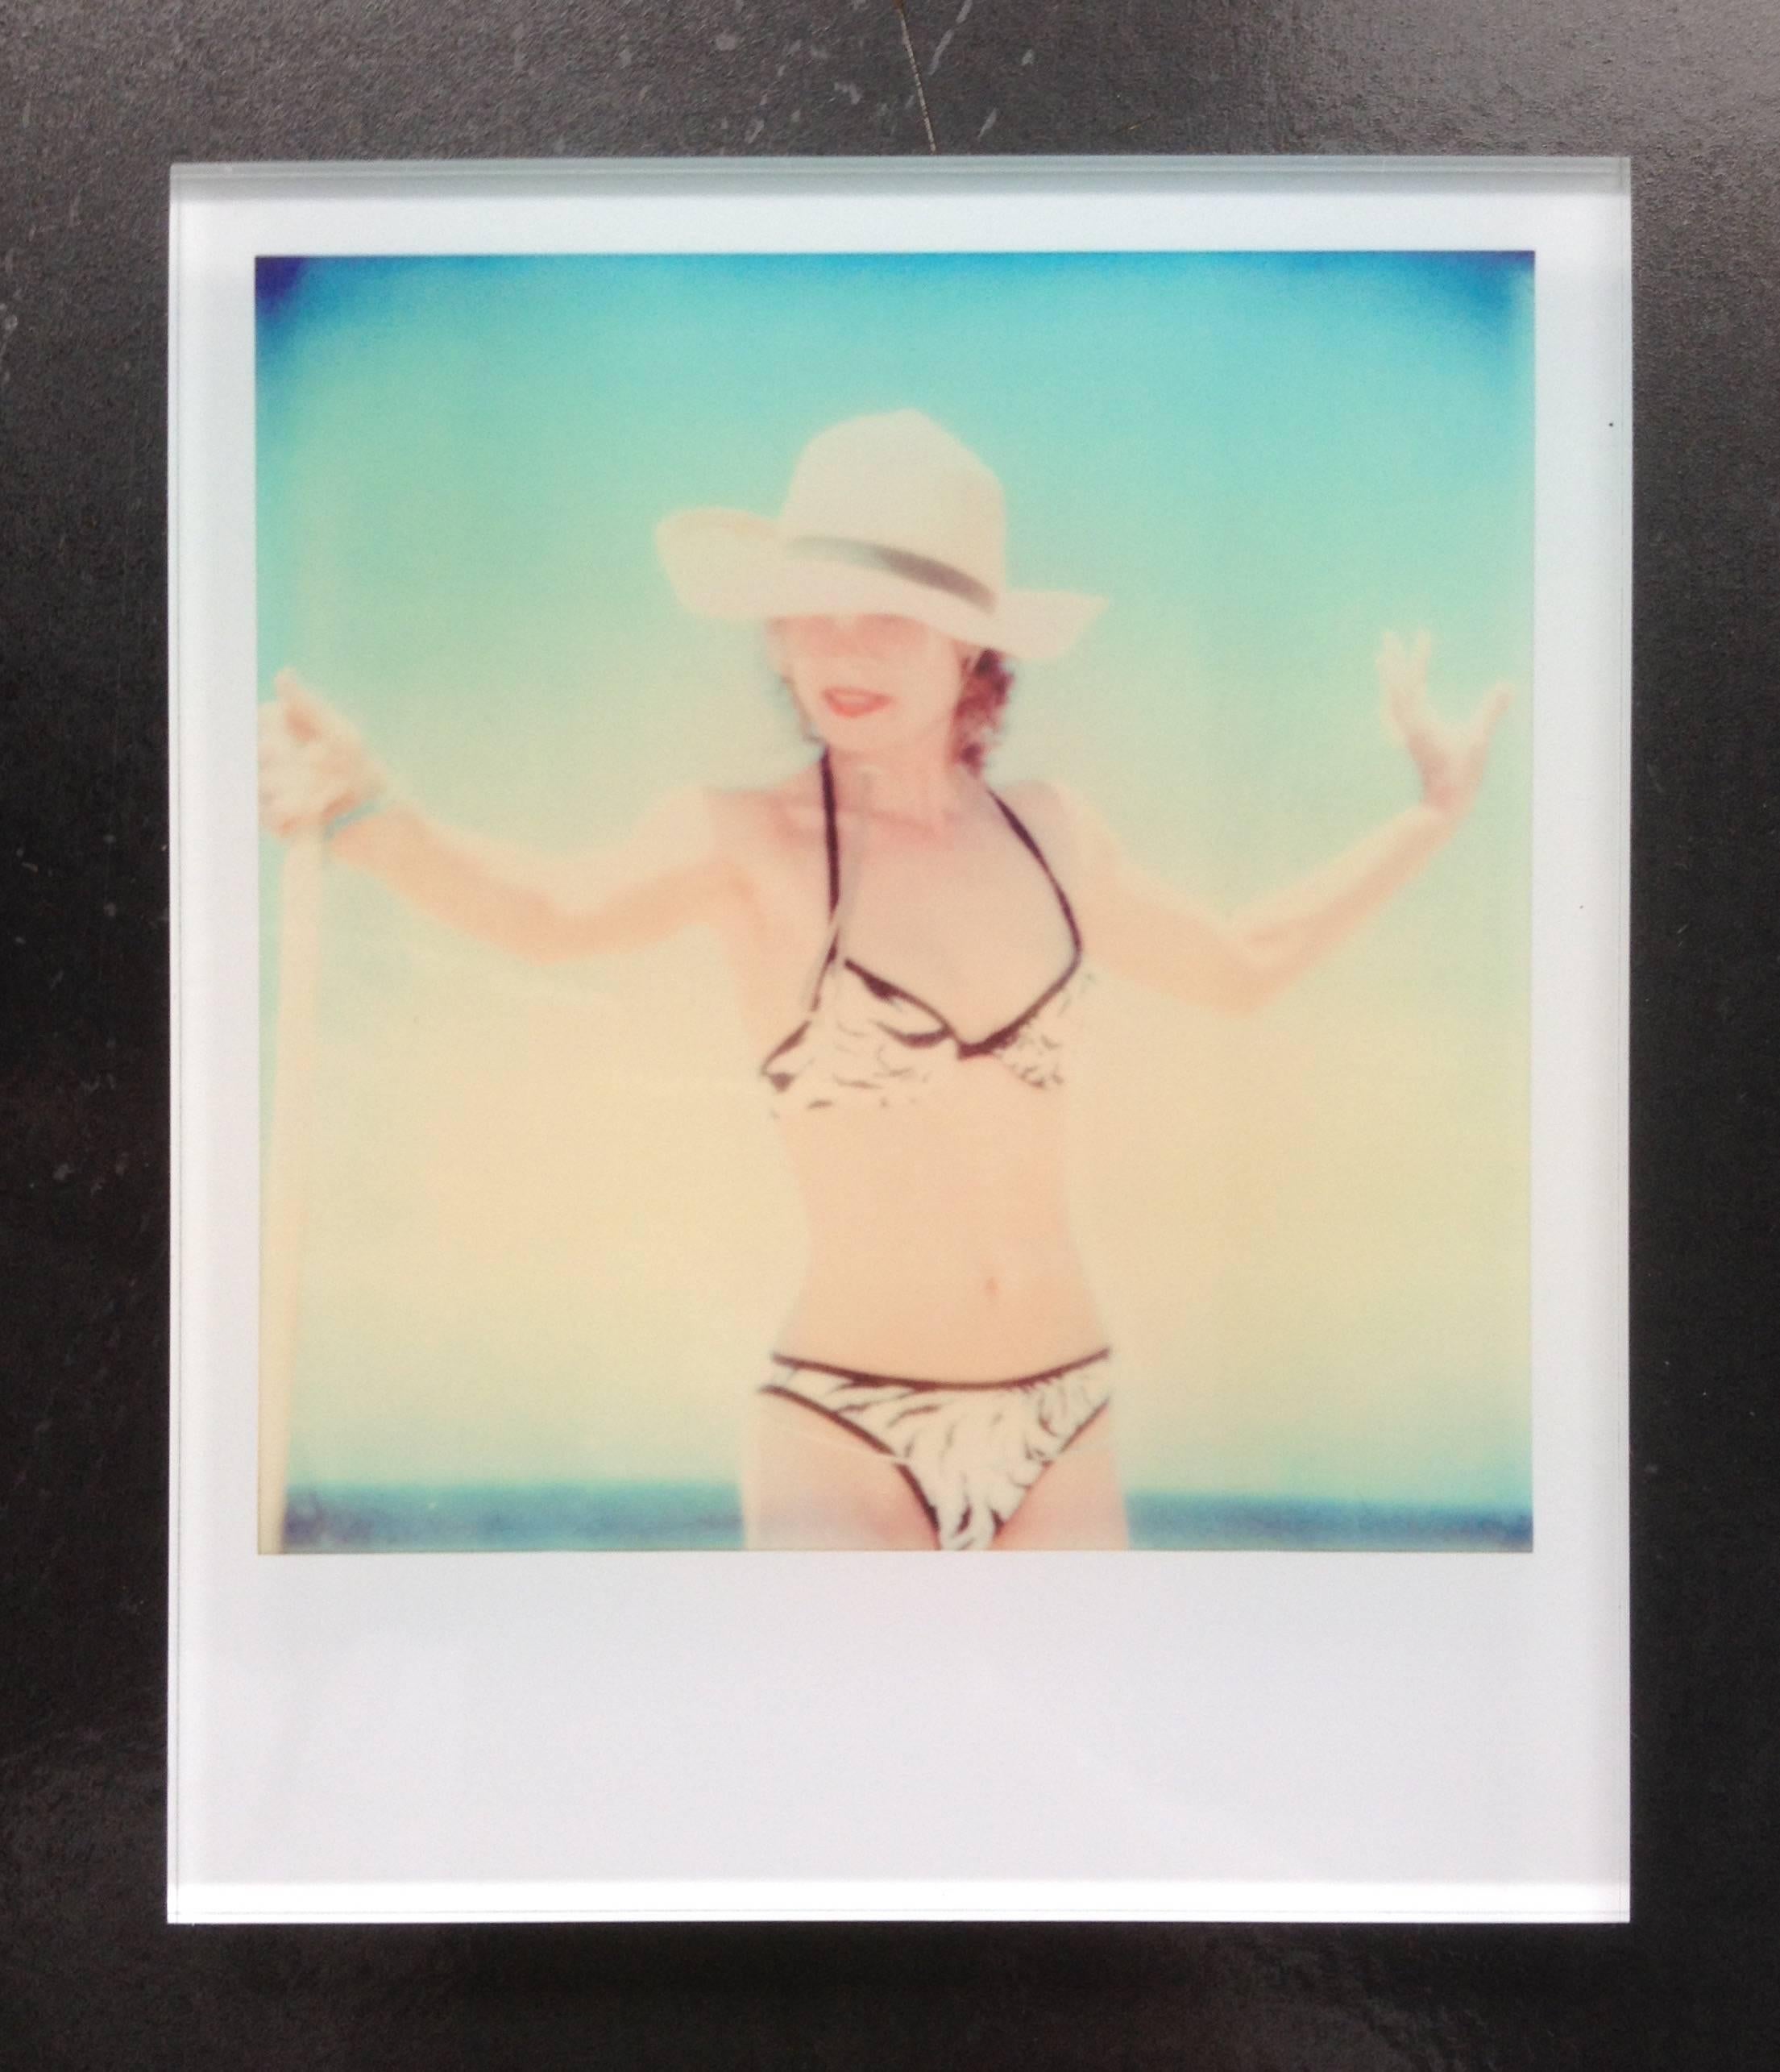 Stefanie Schneider Figurative Photograph - Beachshoot - Contemporary, Figurative, Polaroid, Photograph, expired, 